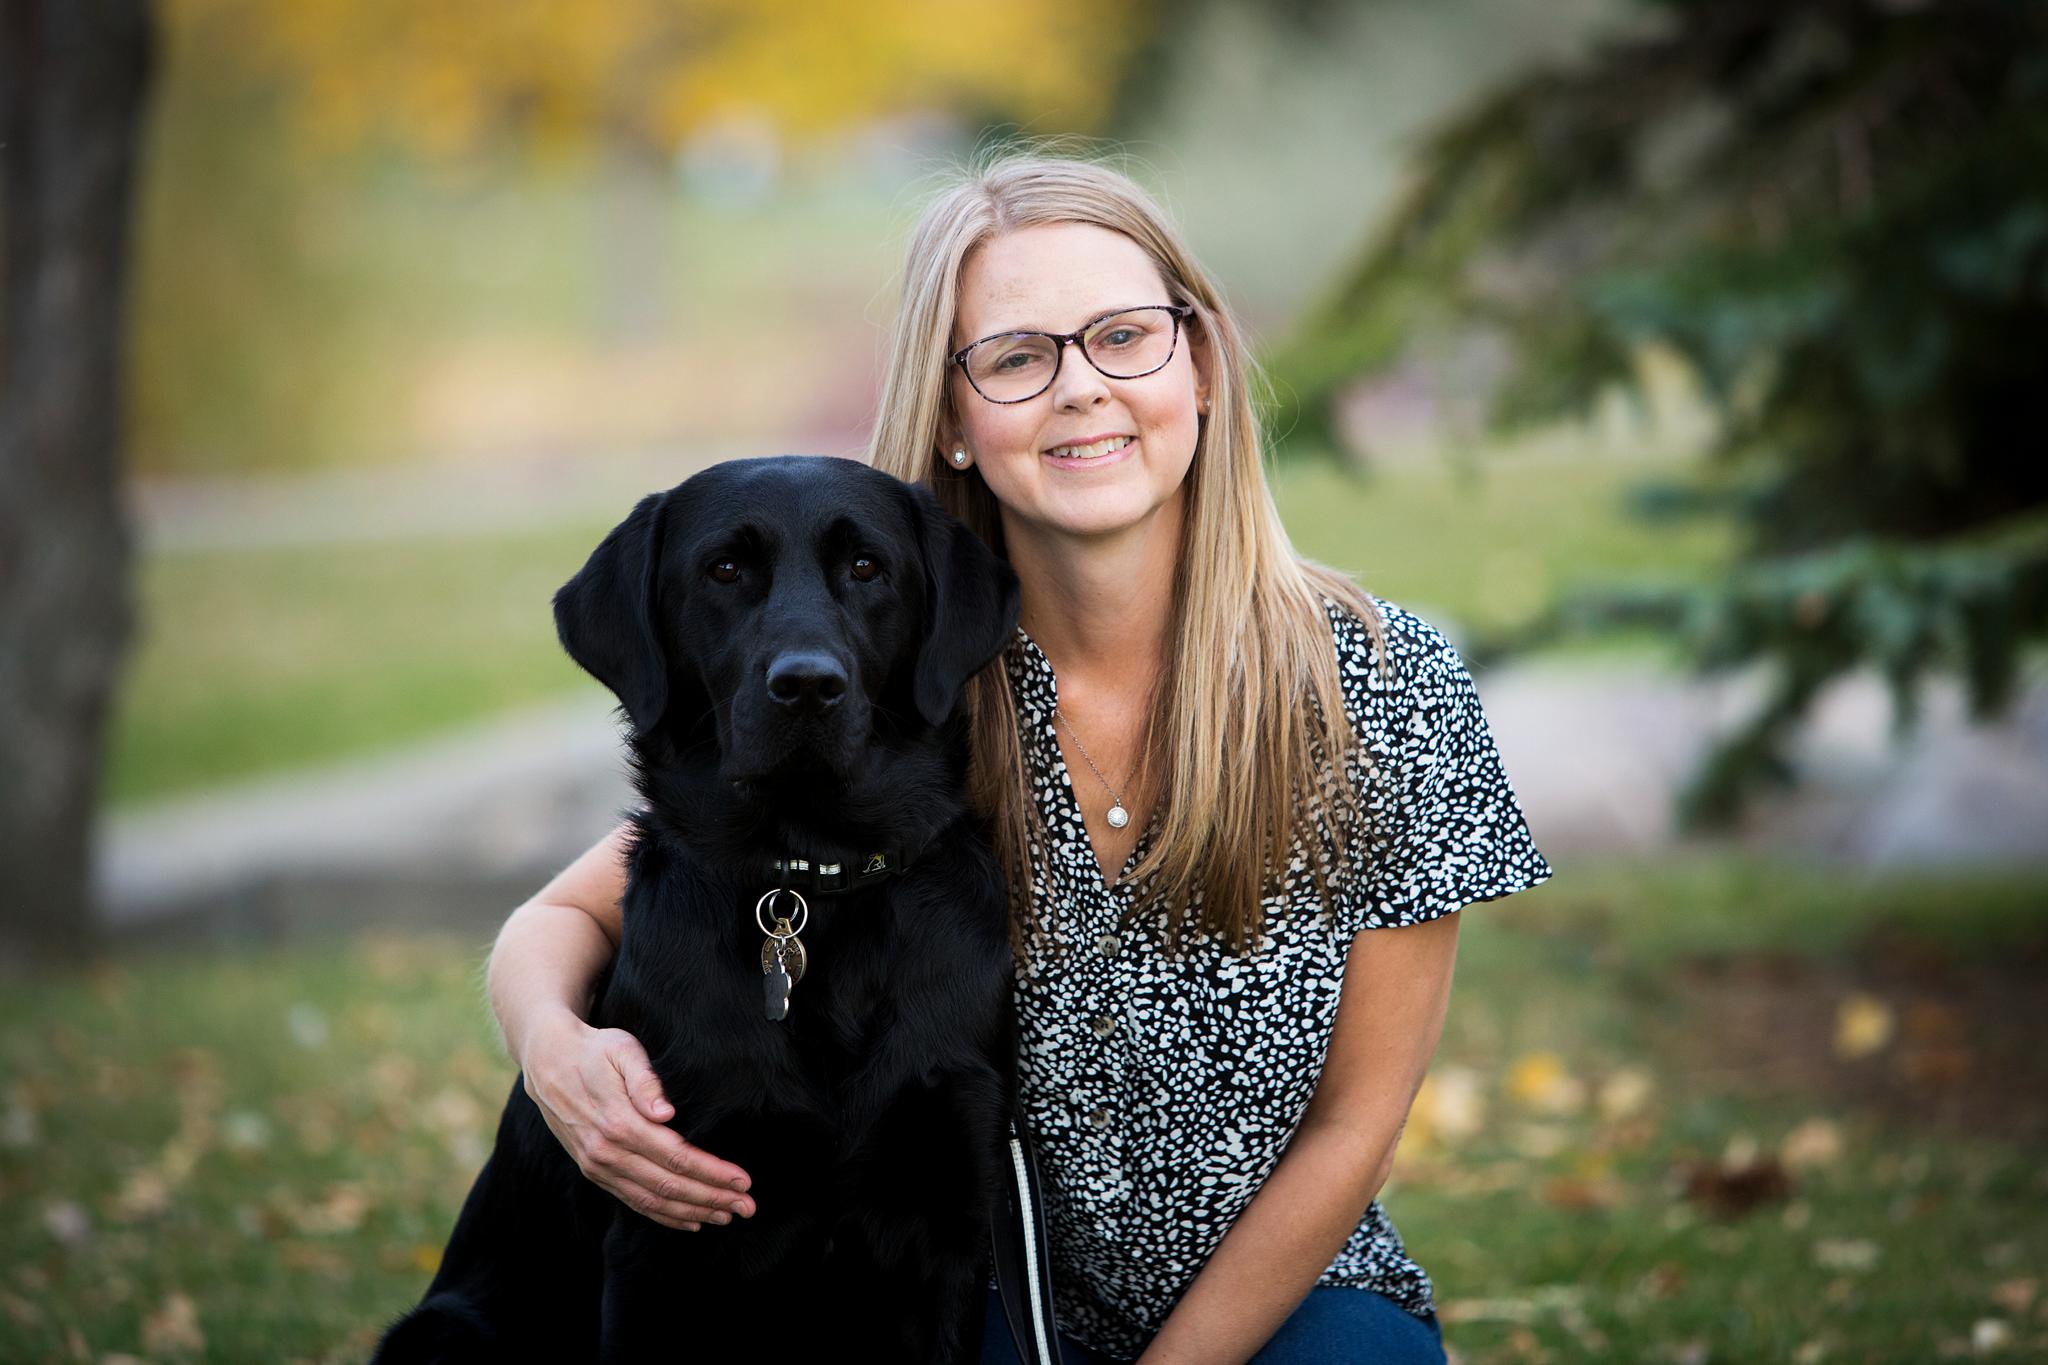 Becki smiling with her arm around her guide dog Lulu, a black Labrador